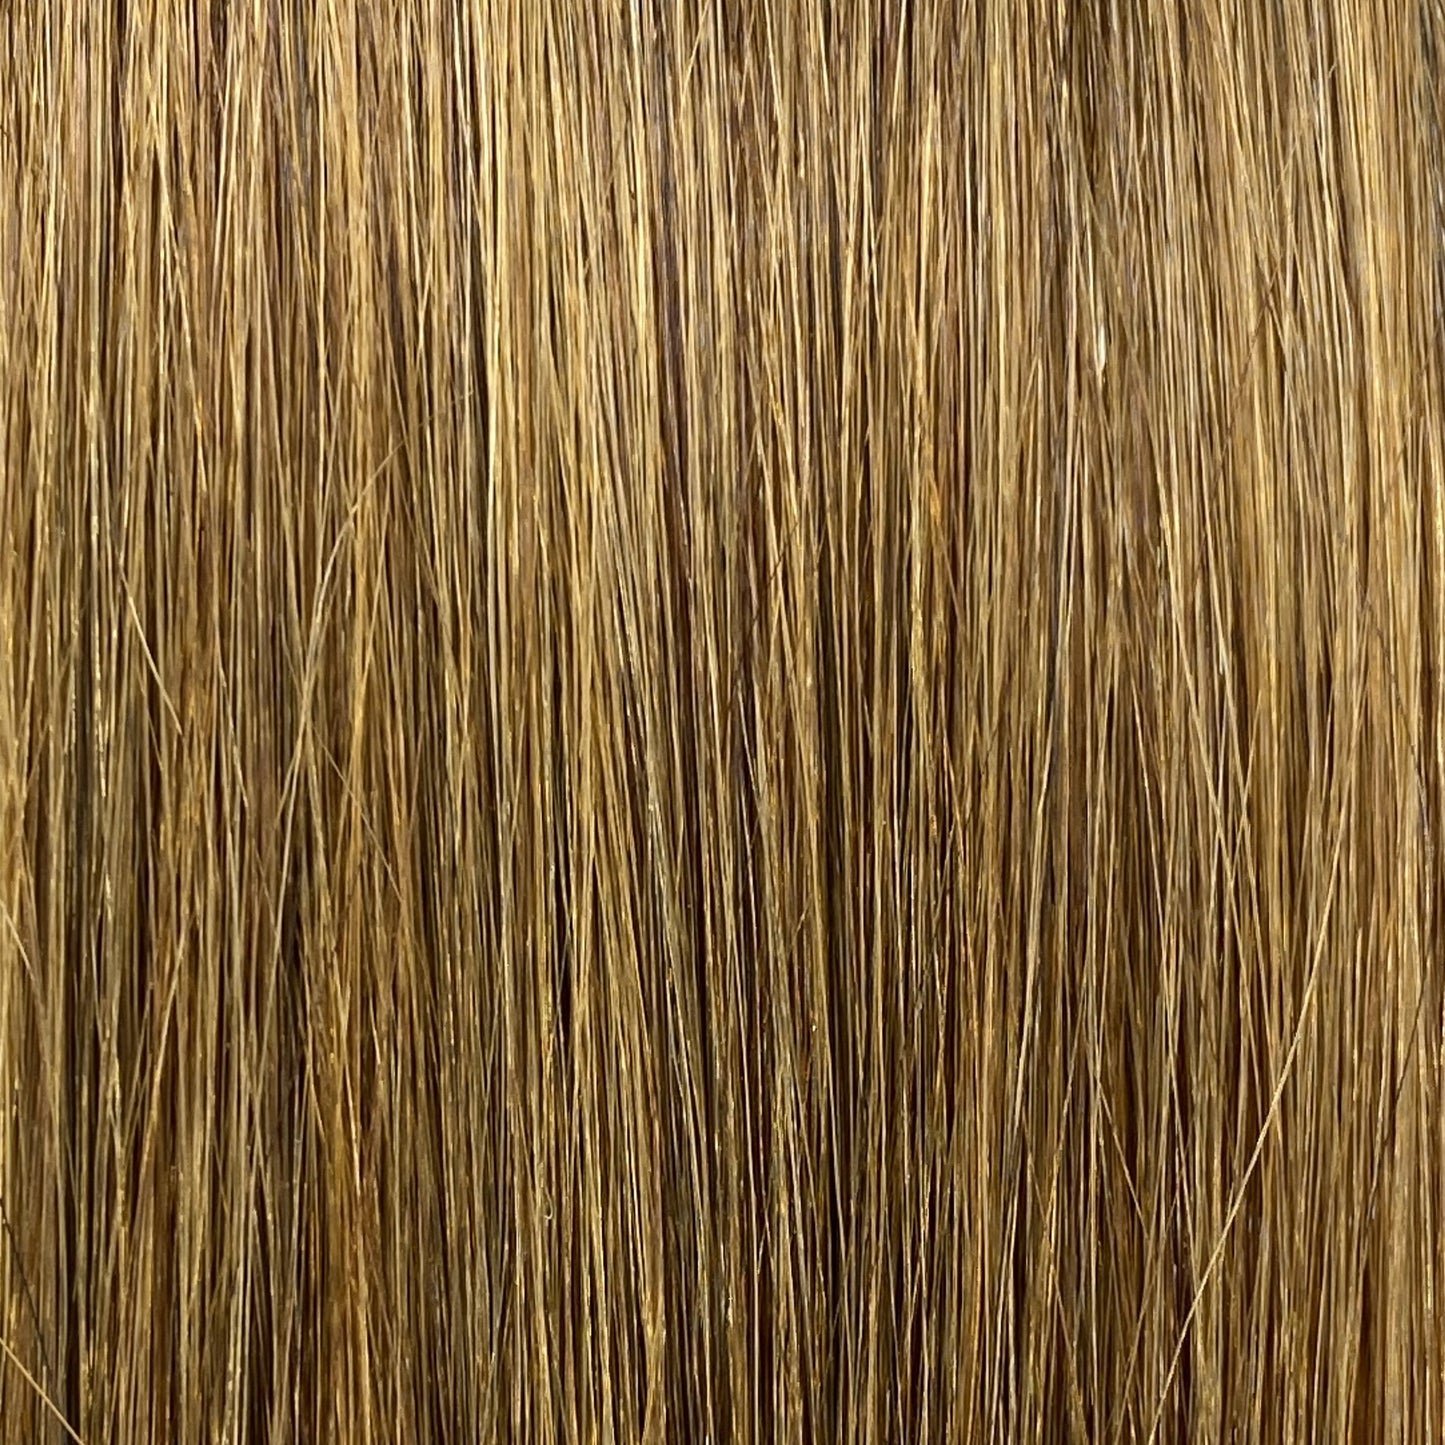 Fusion hair extensions  #10 - 50cm/20 inches - Dark Ash Blonde Fusion Euro So Cap 